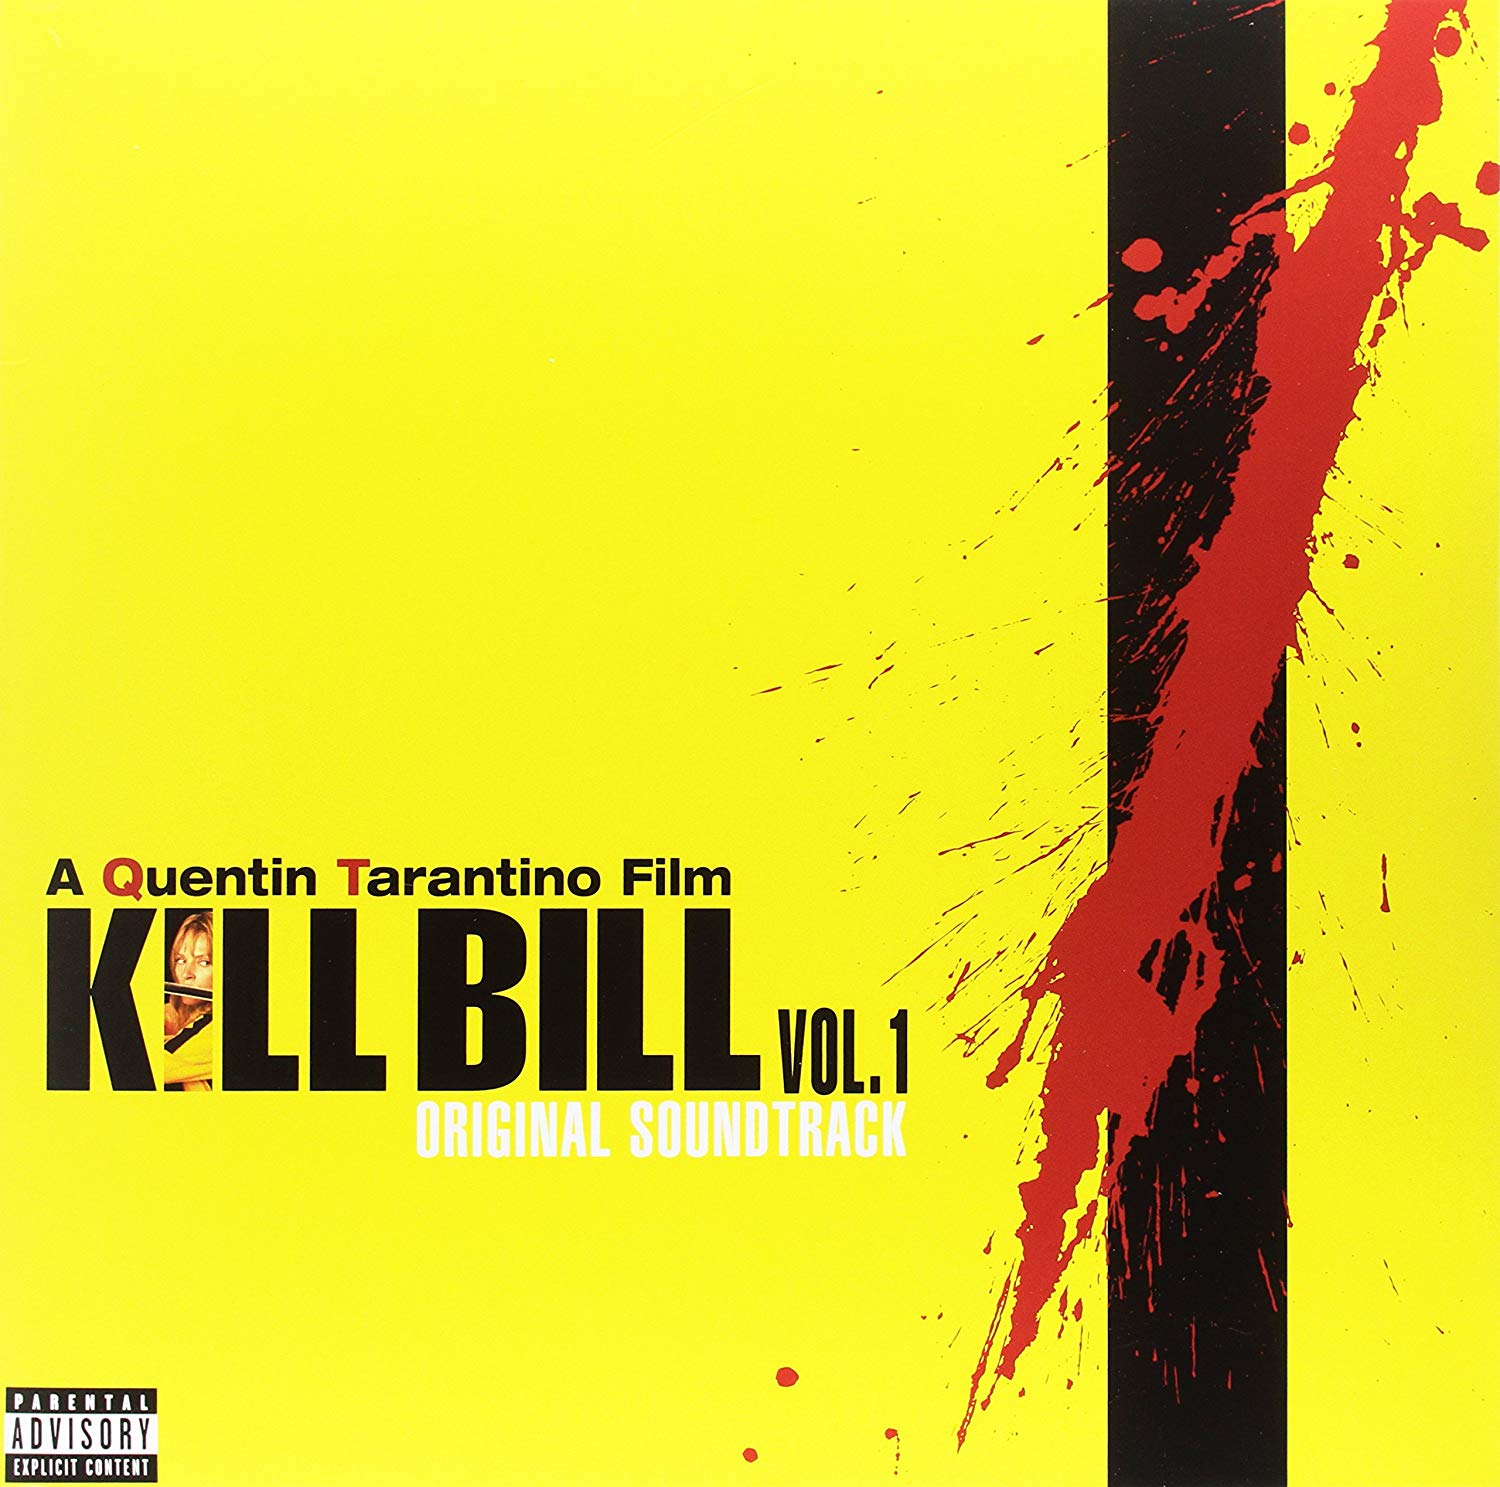  KILL BILL - VOL 1 SOUNDTRACK $22  